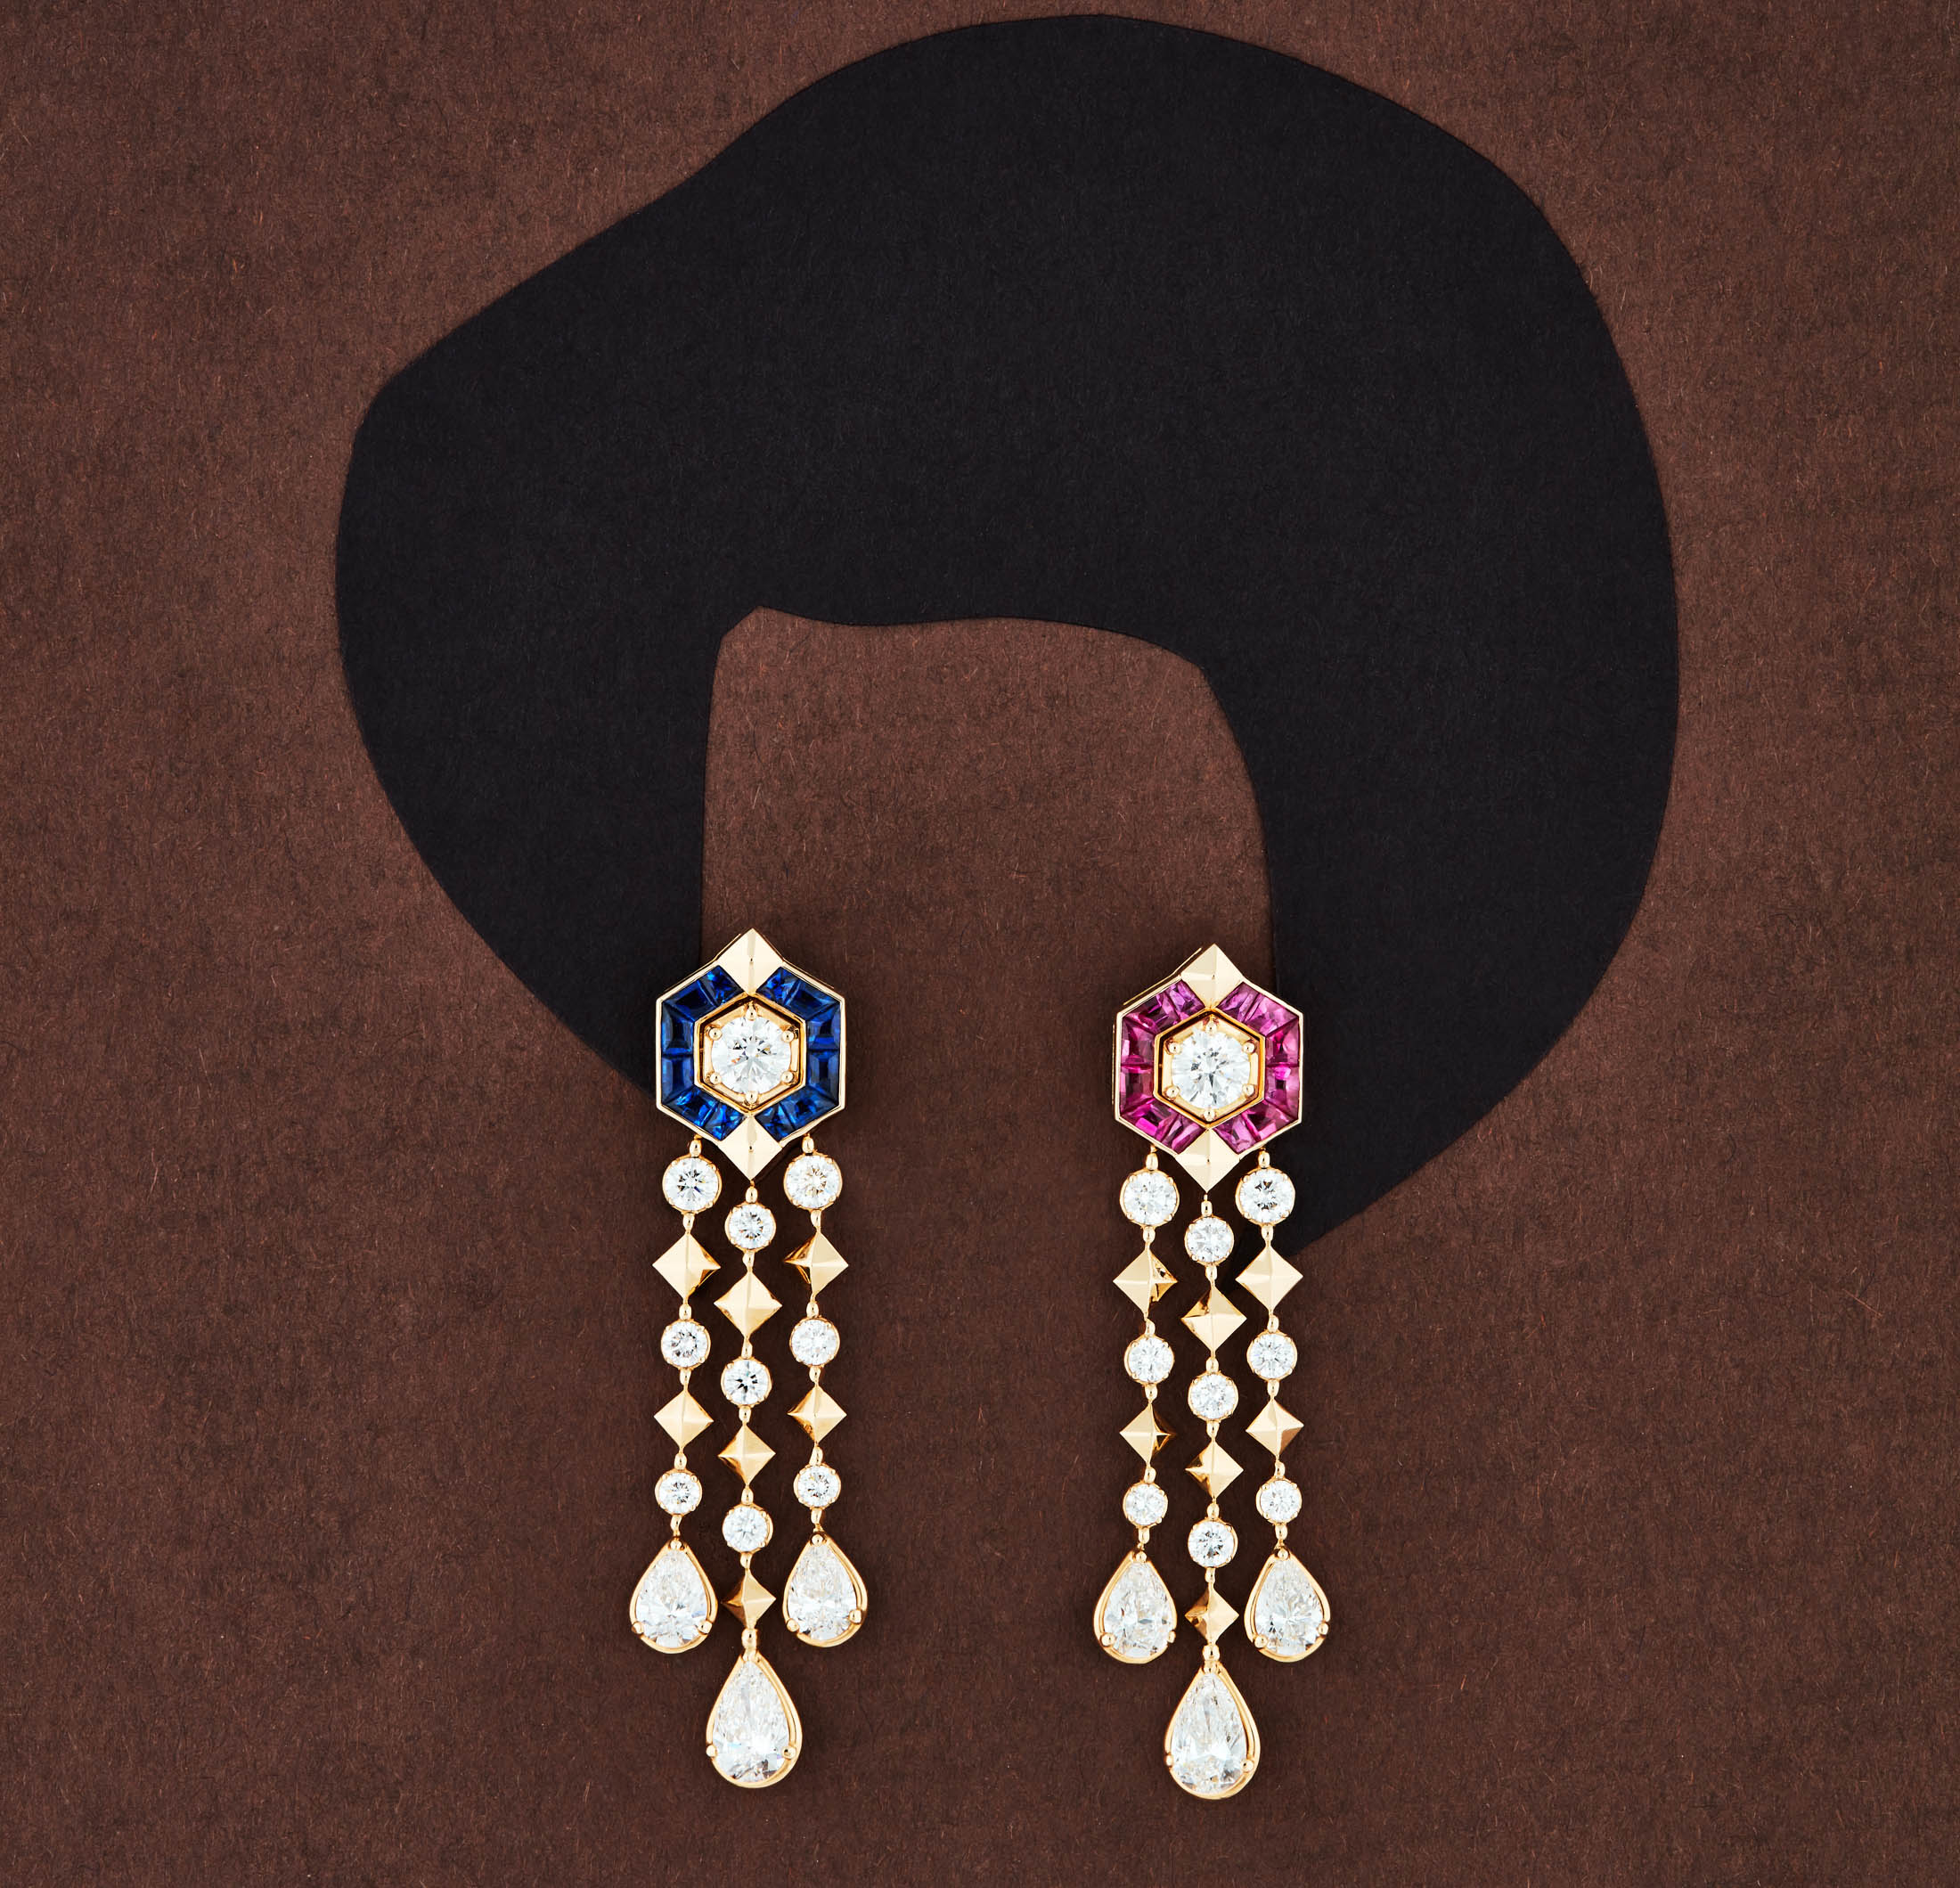 Bulgari Earrings From Barocko Jewelry Collection Turn Heads - Bloomberg